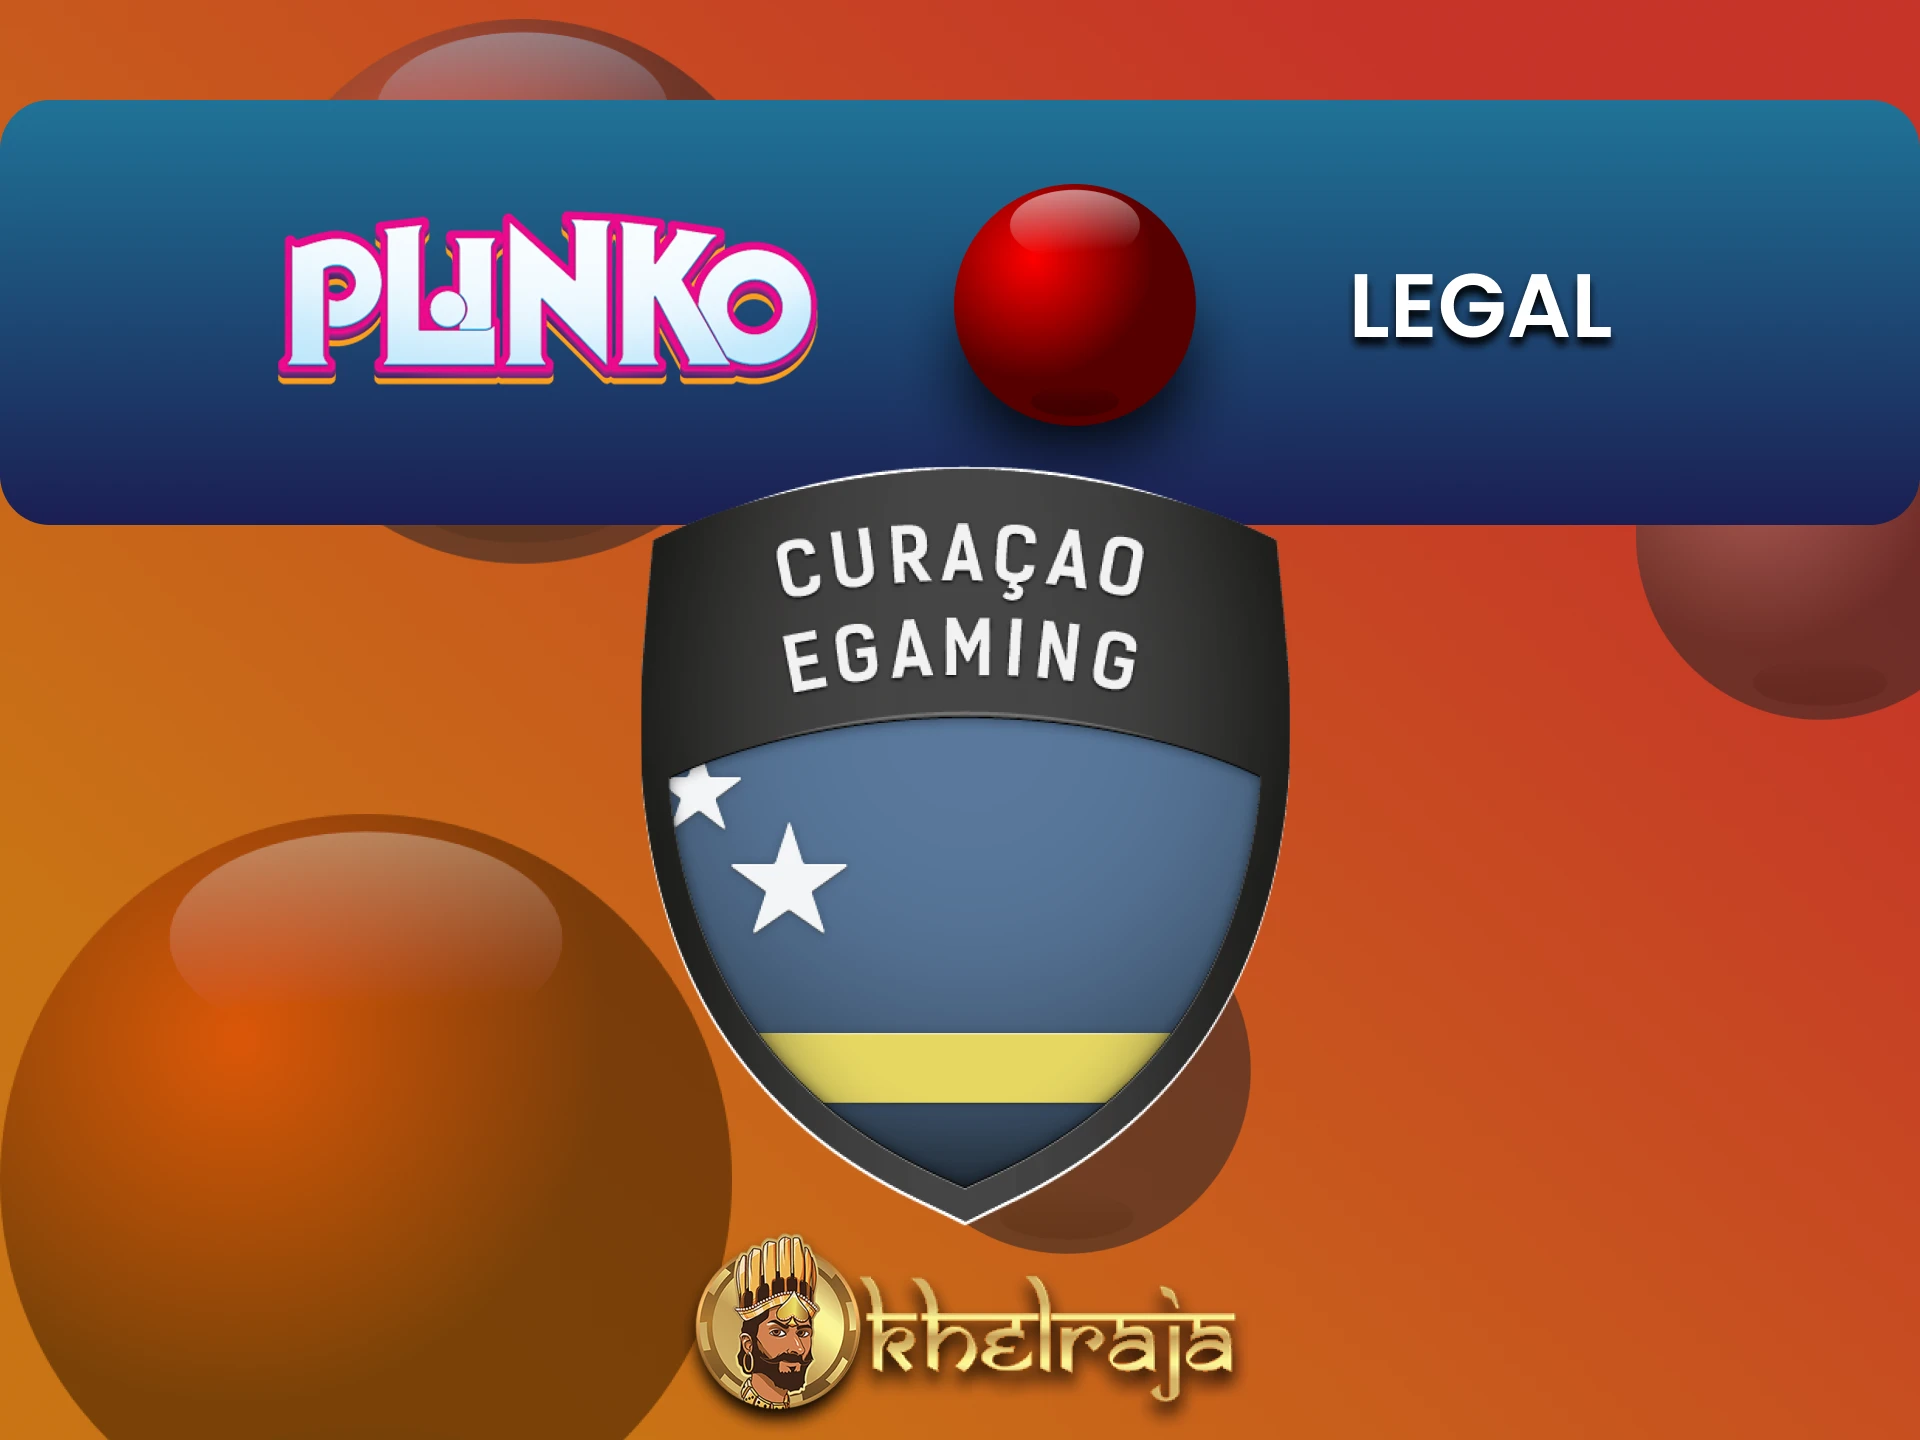 Khelraja is legal to play Plinko in India.